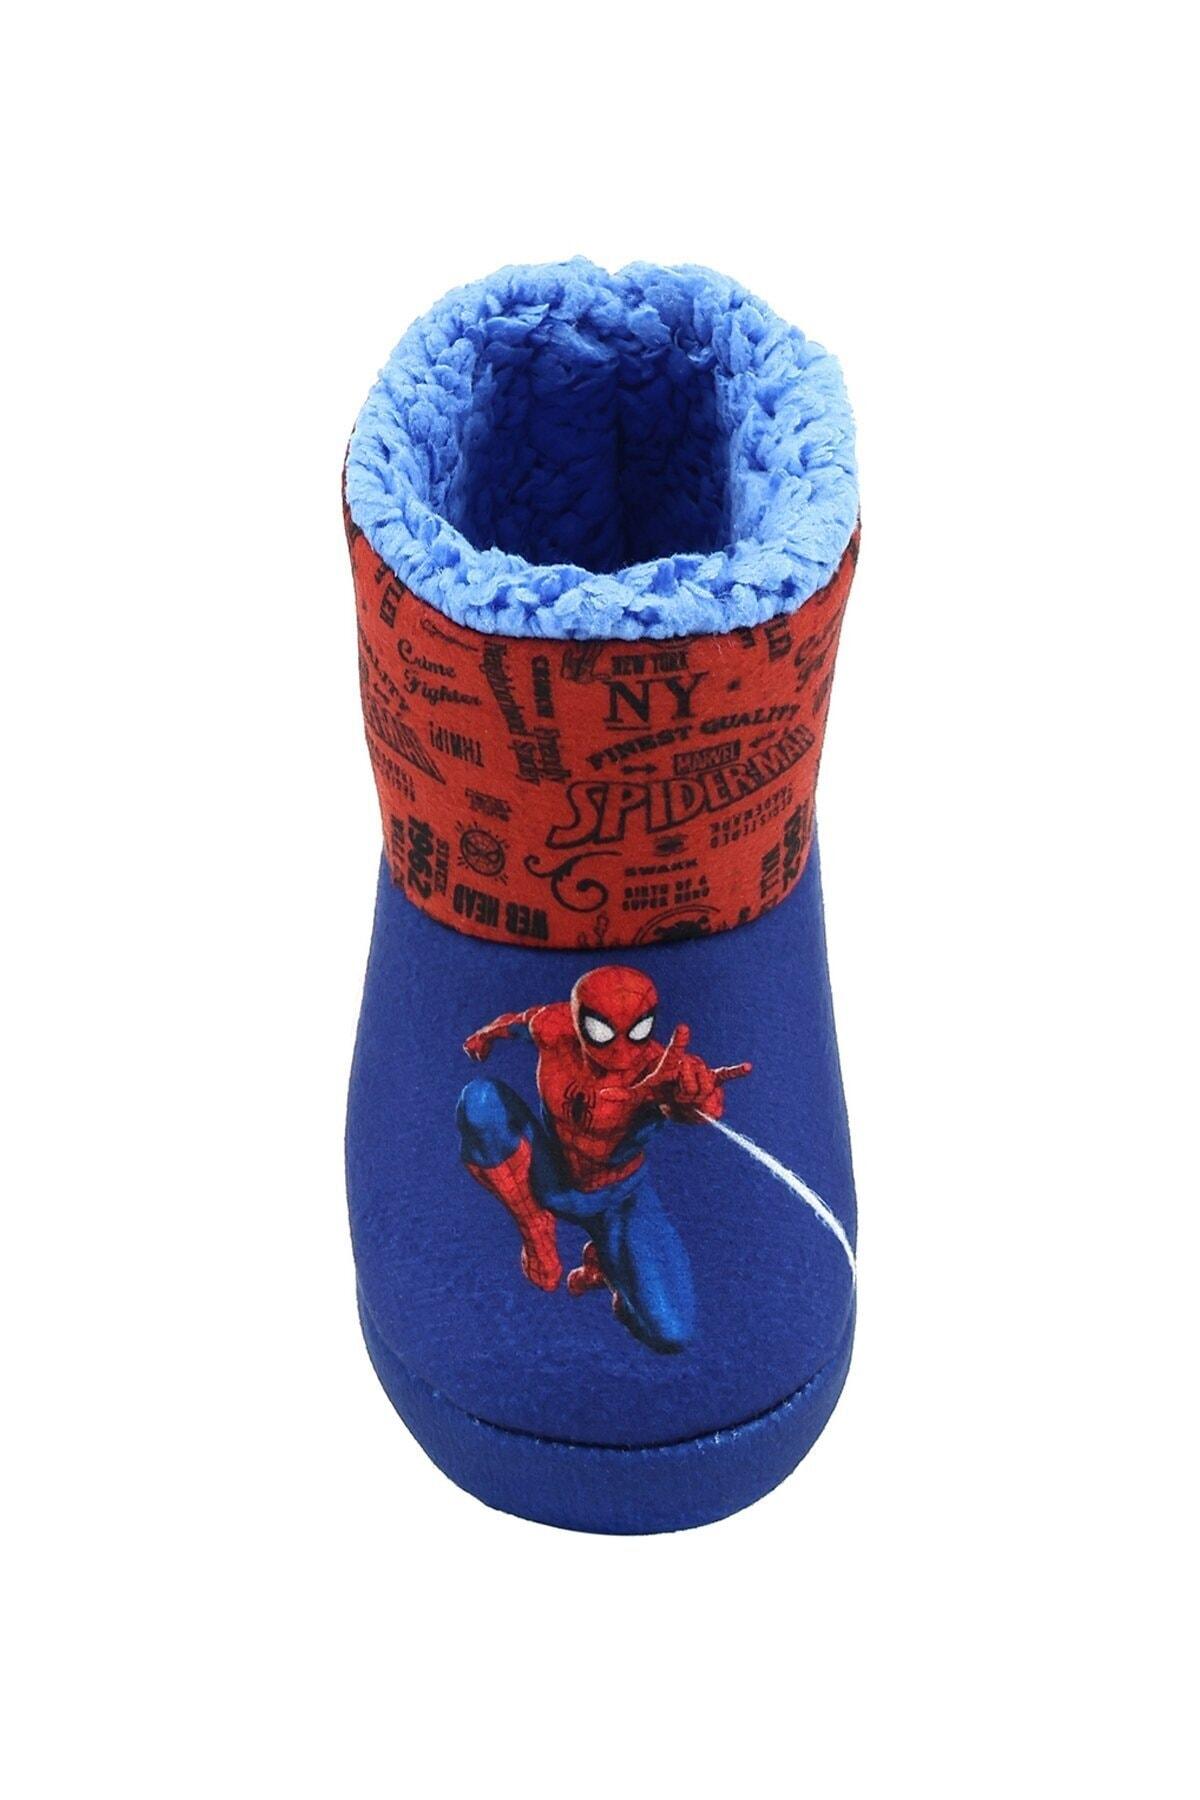 بوت پسرانه Spiderman کد.1002